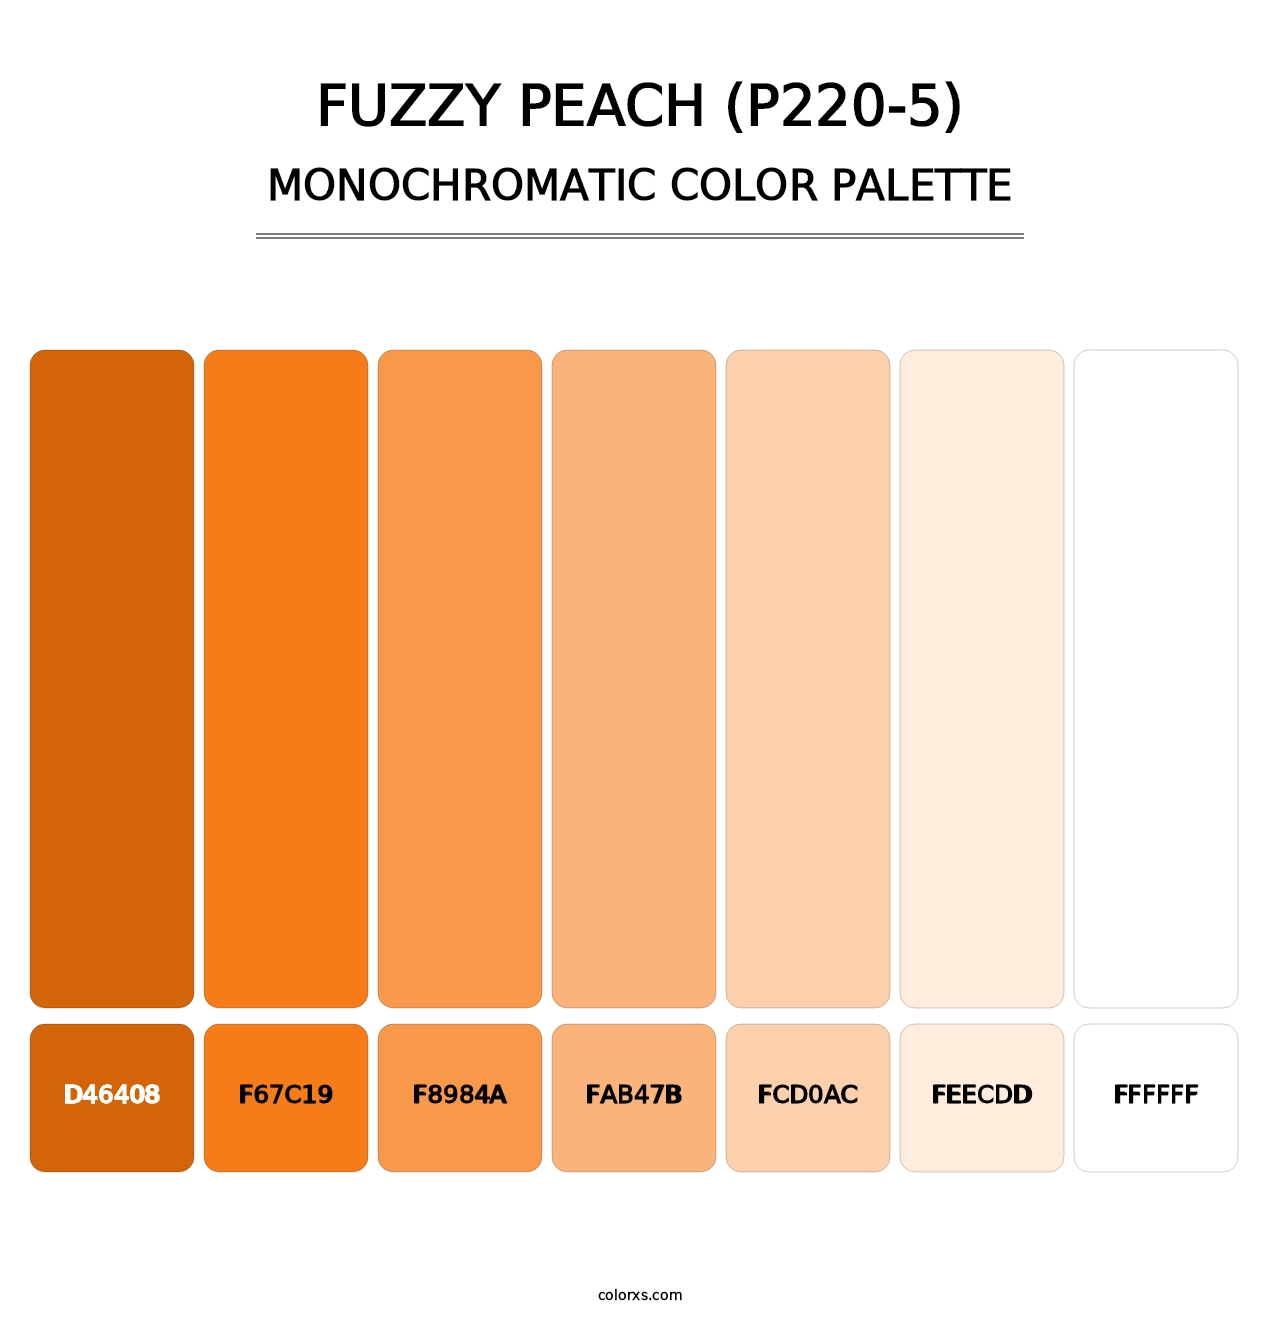 Fuzzy Peach (P220-5) - Monochromatic Color Palette